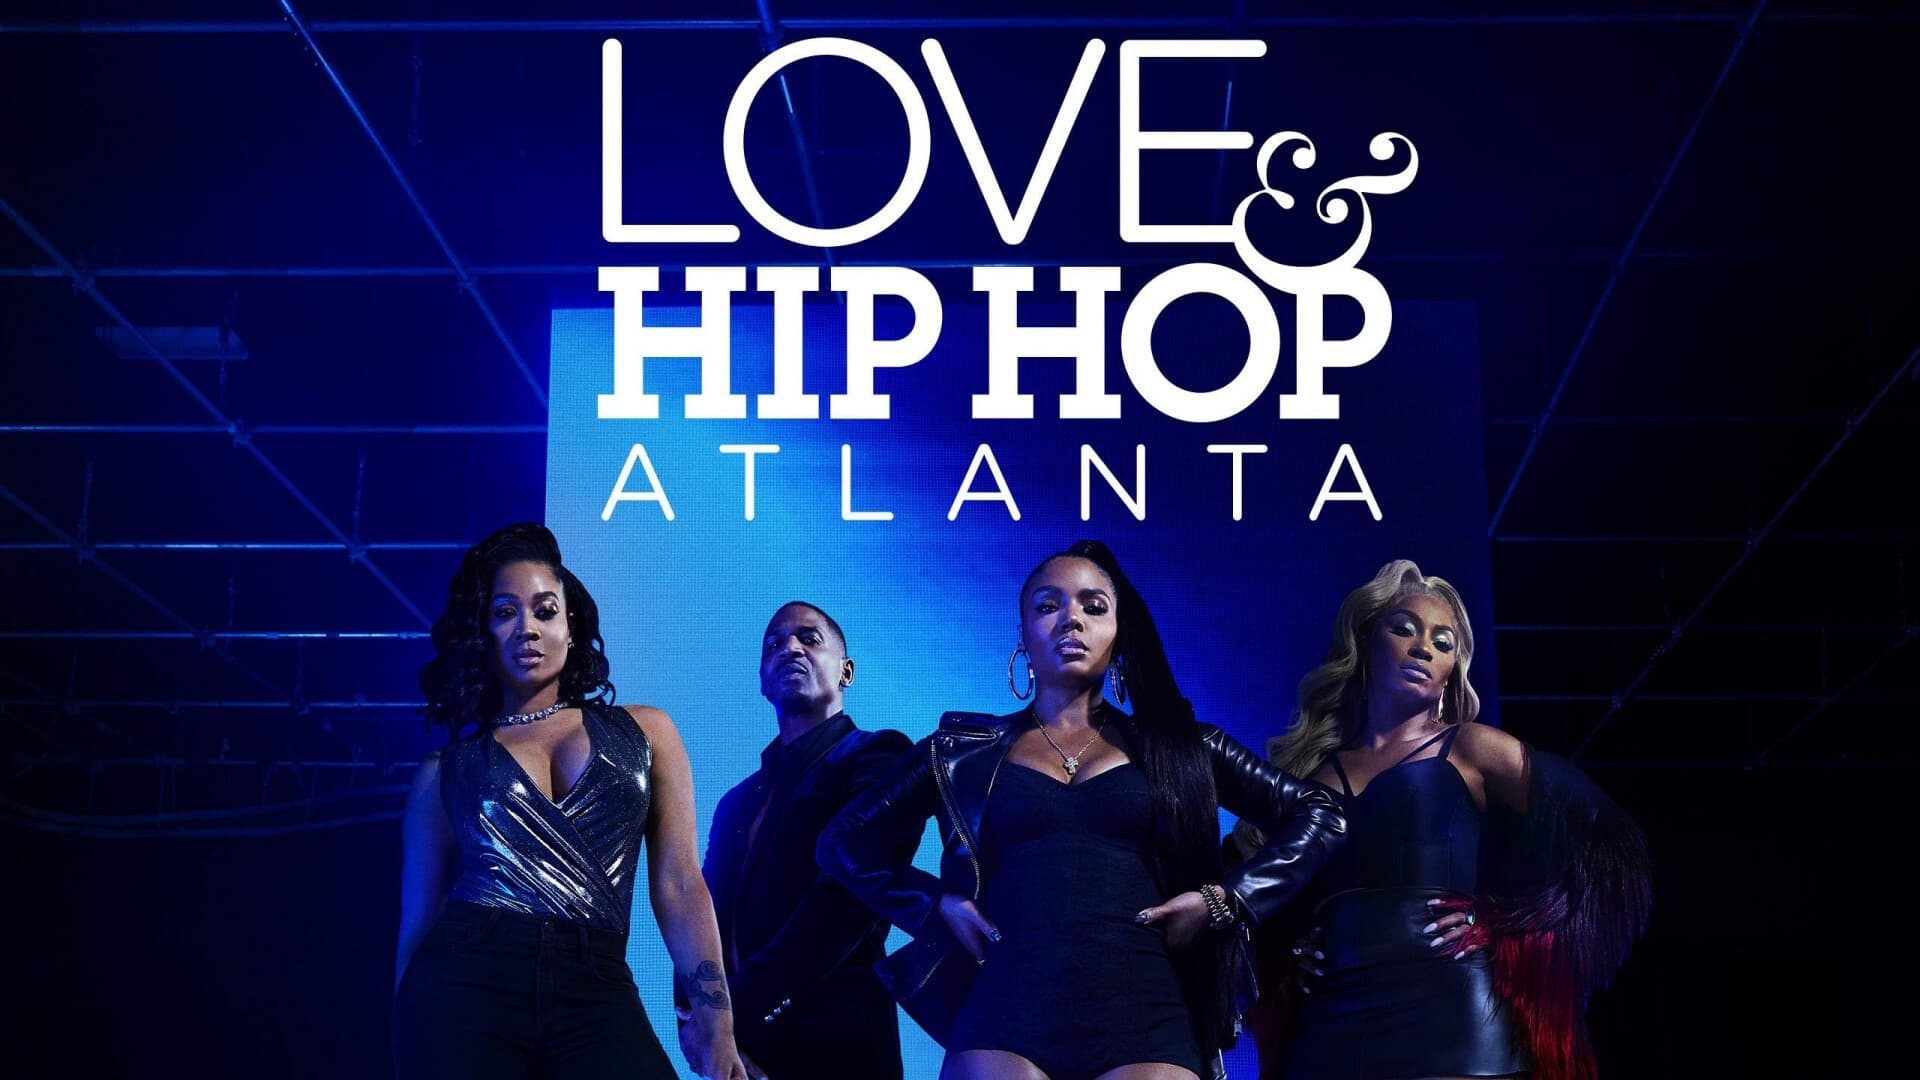 watch love & hip hop atlanta full episode online in hd quality,watc...